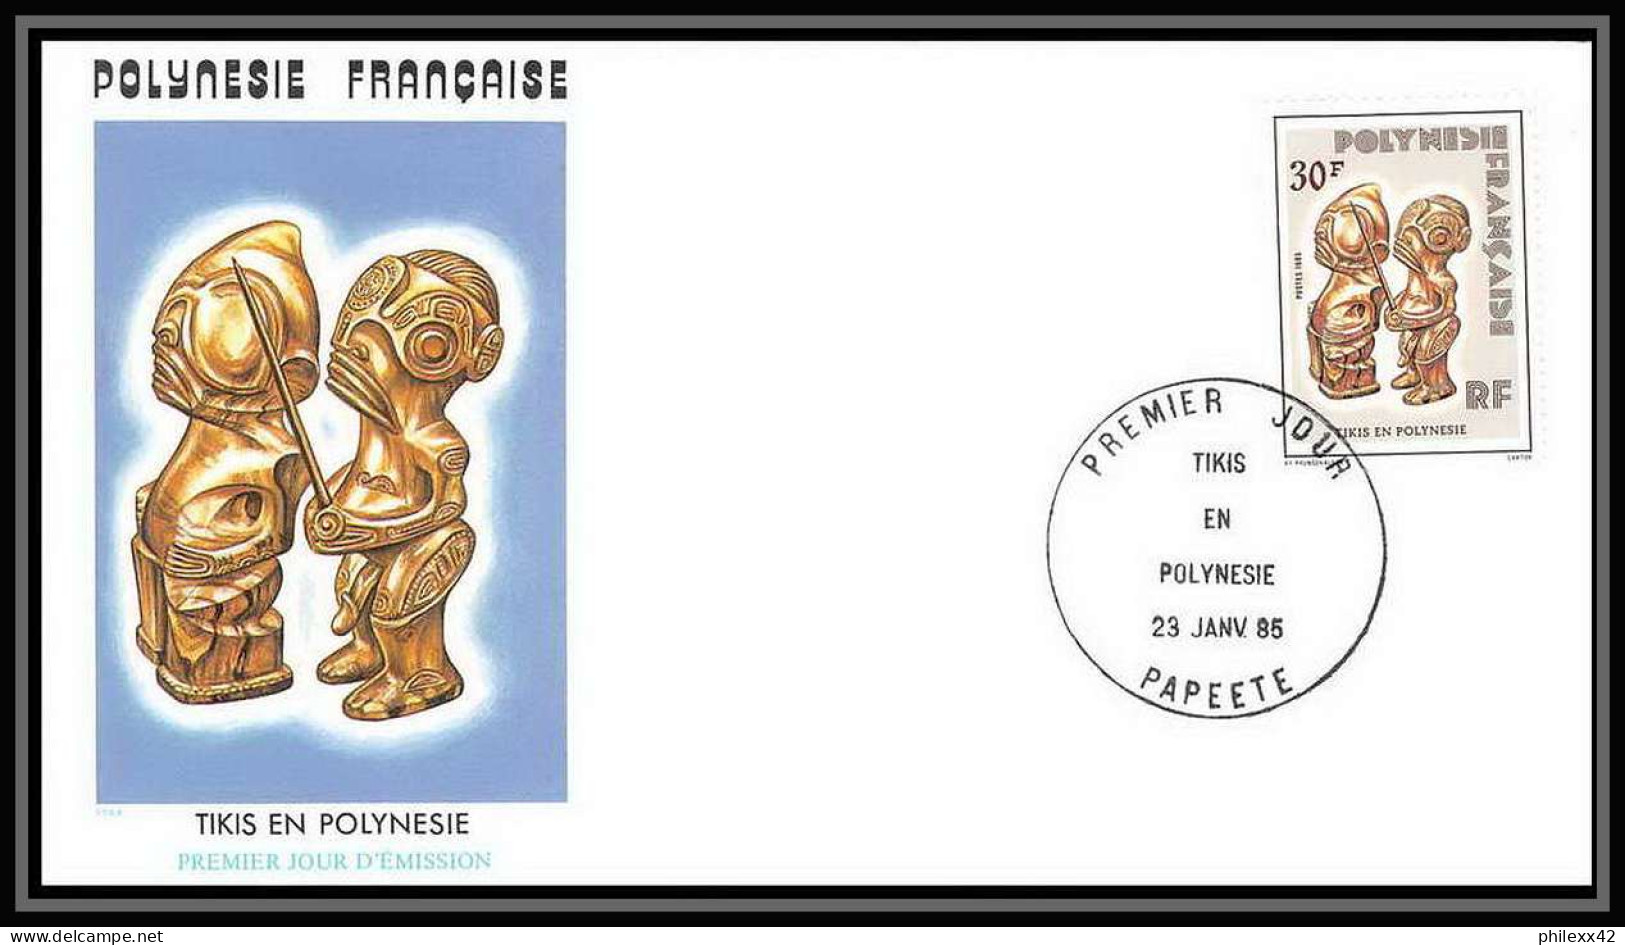 1722 épreuve de luxe / deluxe proof Polynésie (Polynesia) N° 227/229 Tikis en Polynésie statue statuette + fdc